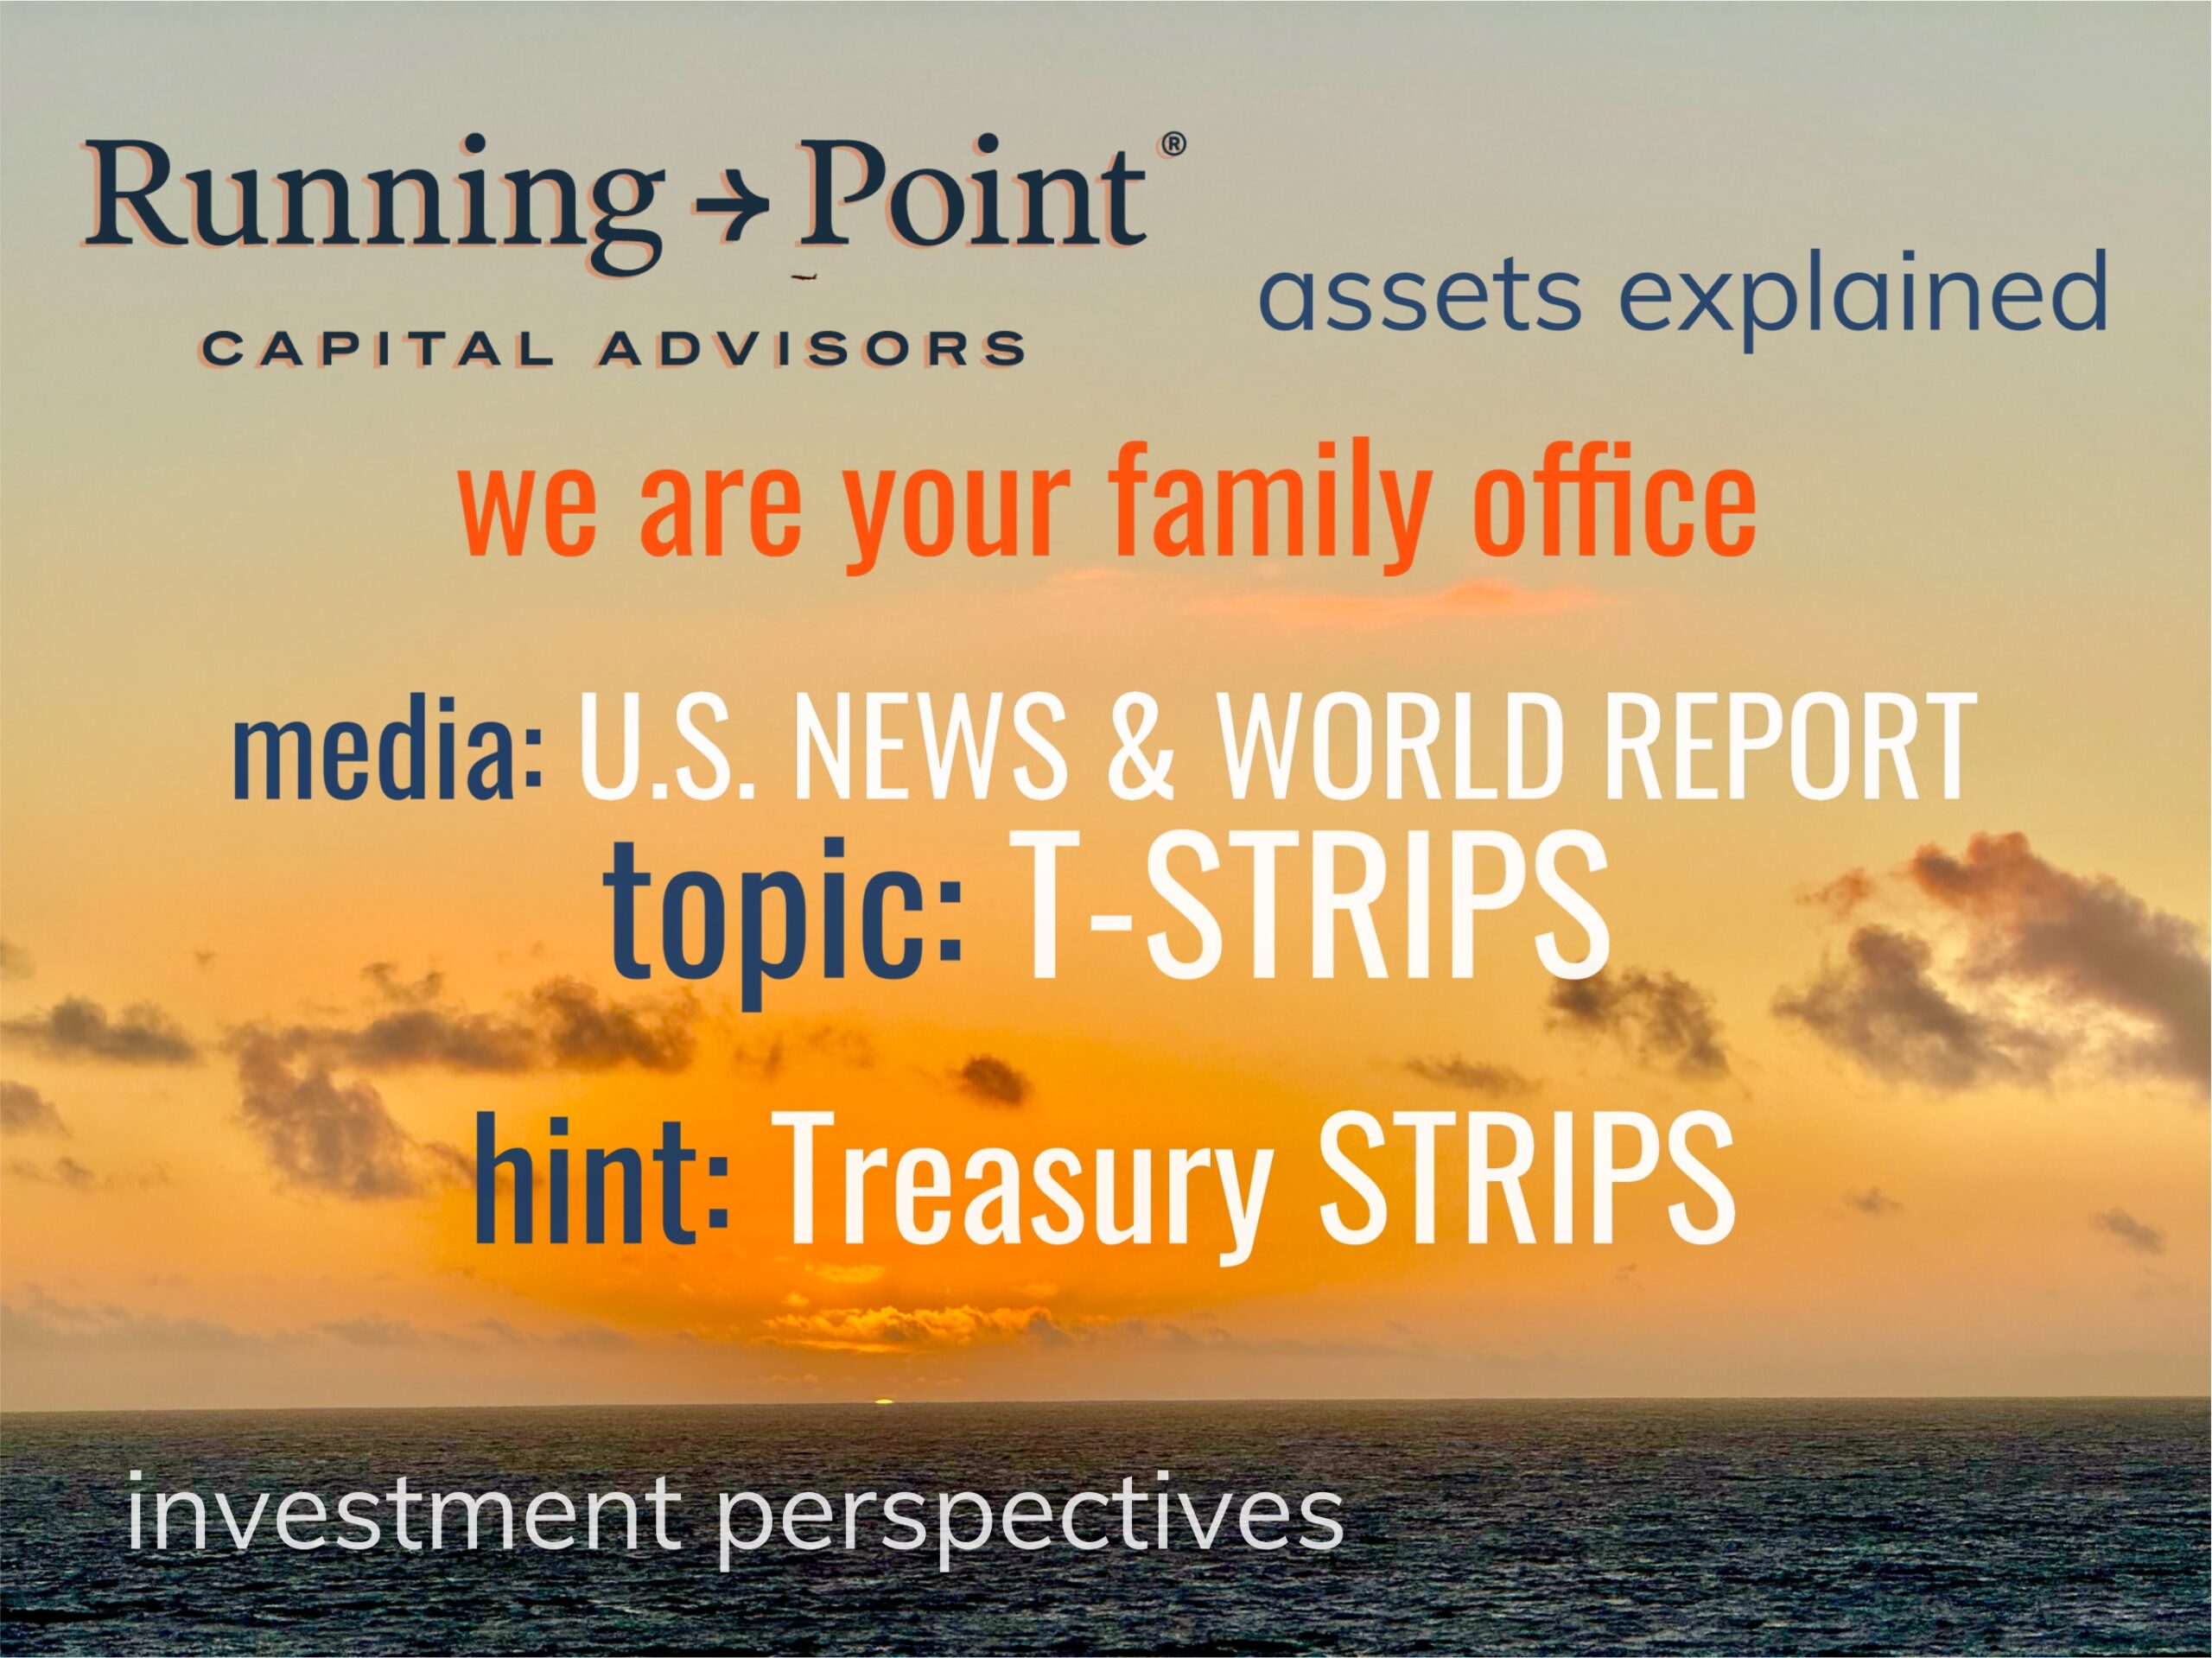 U.S. News & World Report: Treasury Strips (T-STRIPS)